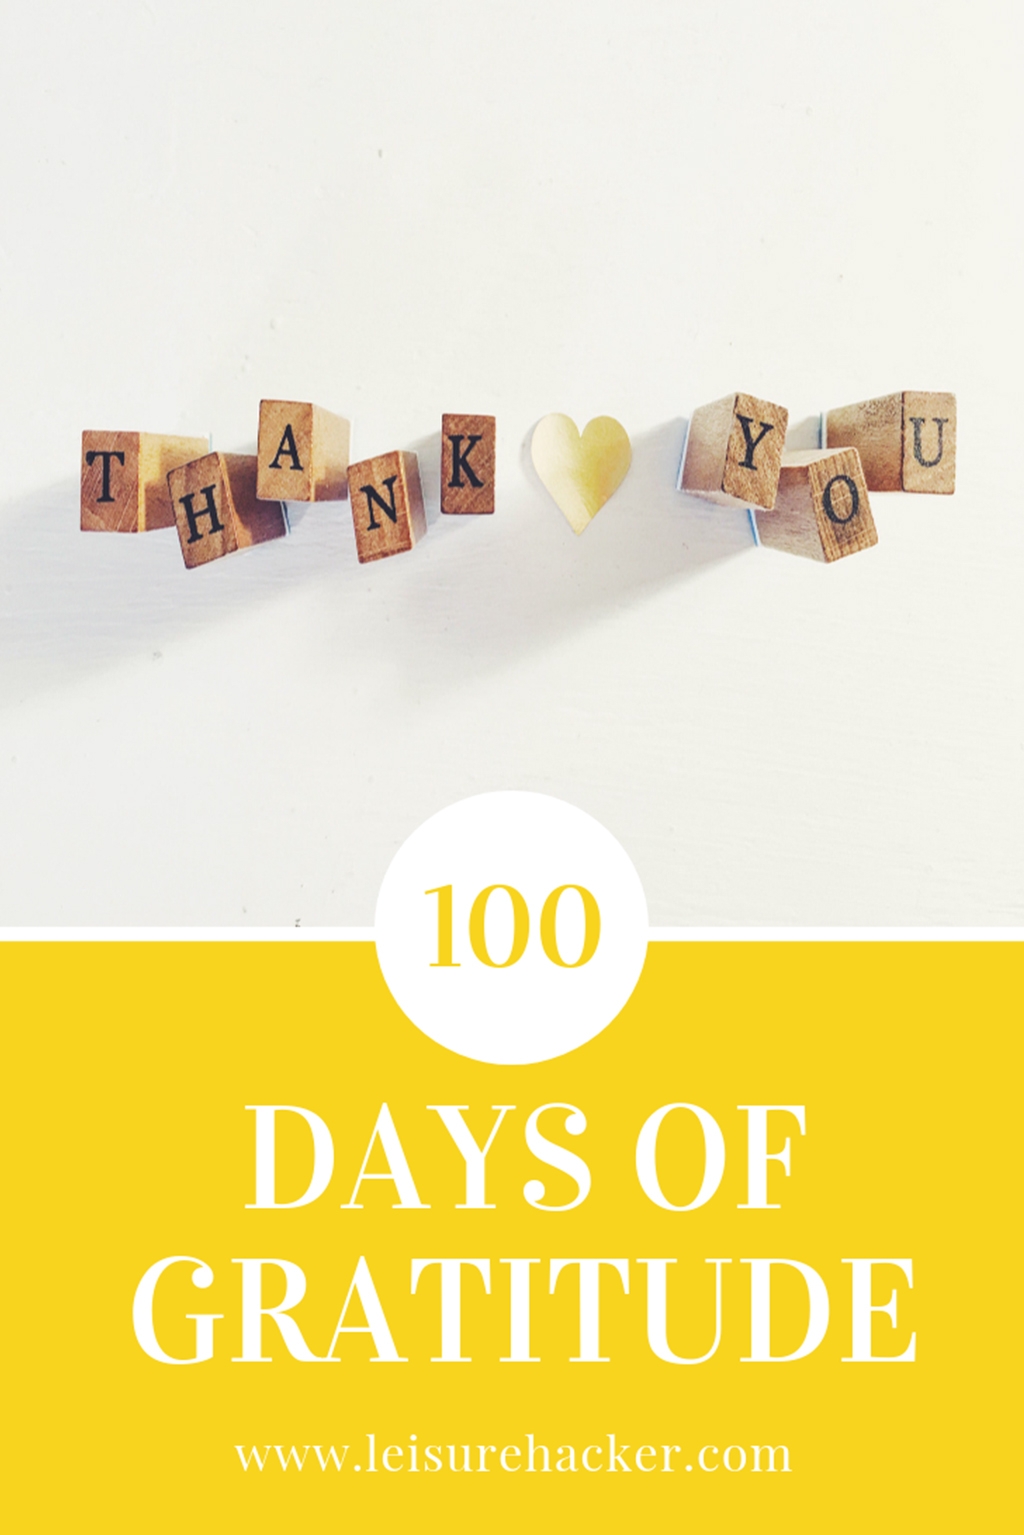 100 Days of gratitude